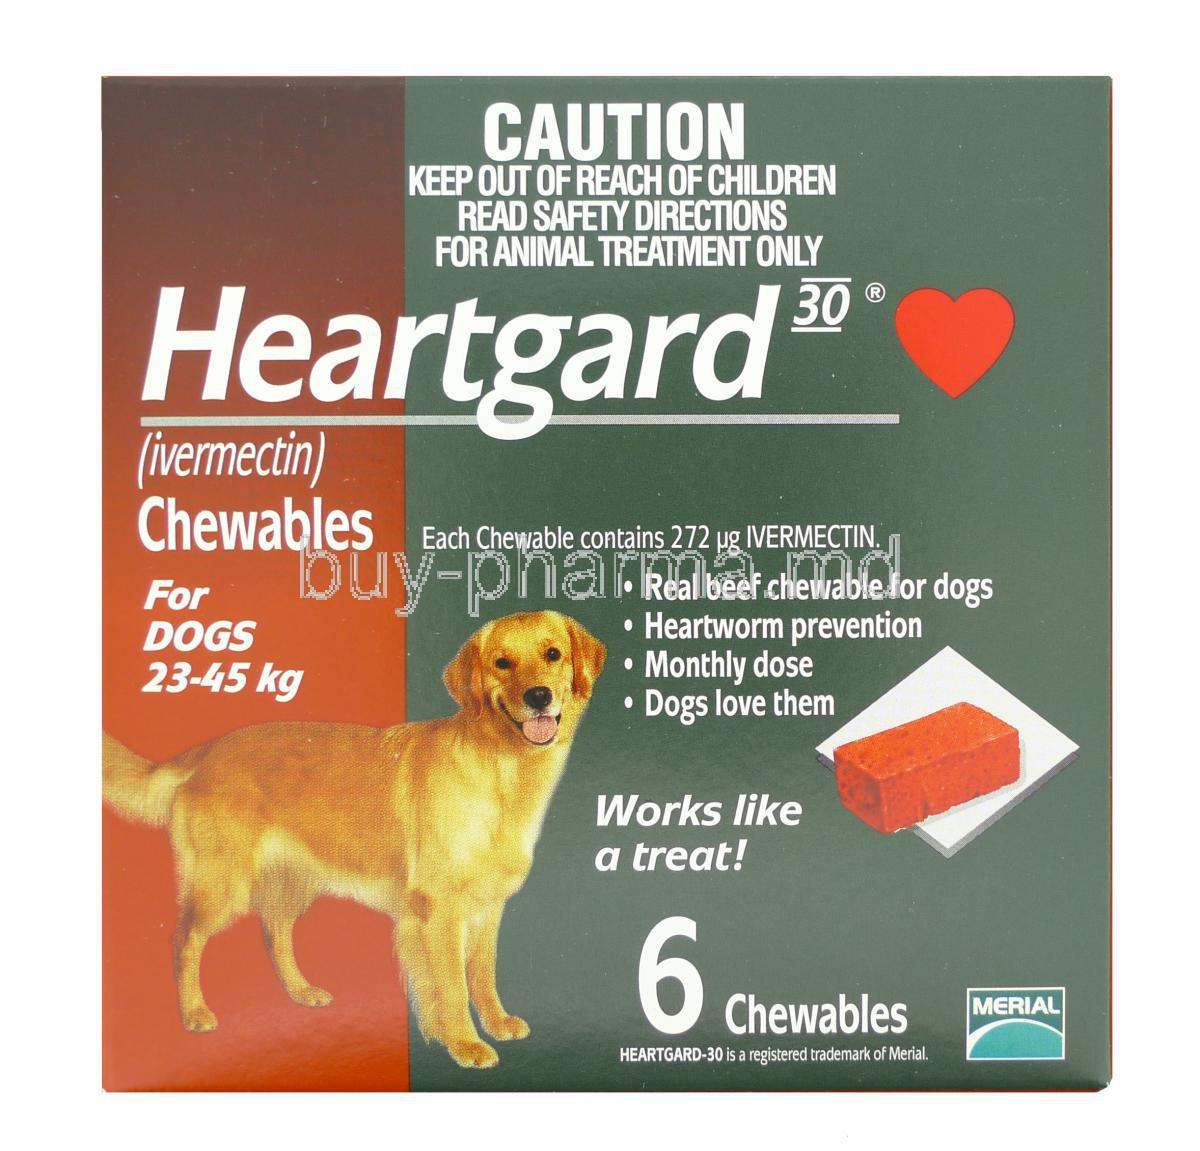 Heartgard 30 Chewable 272mcg large Dog (23-45kg)